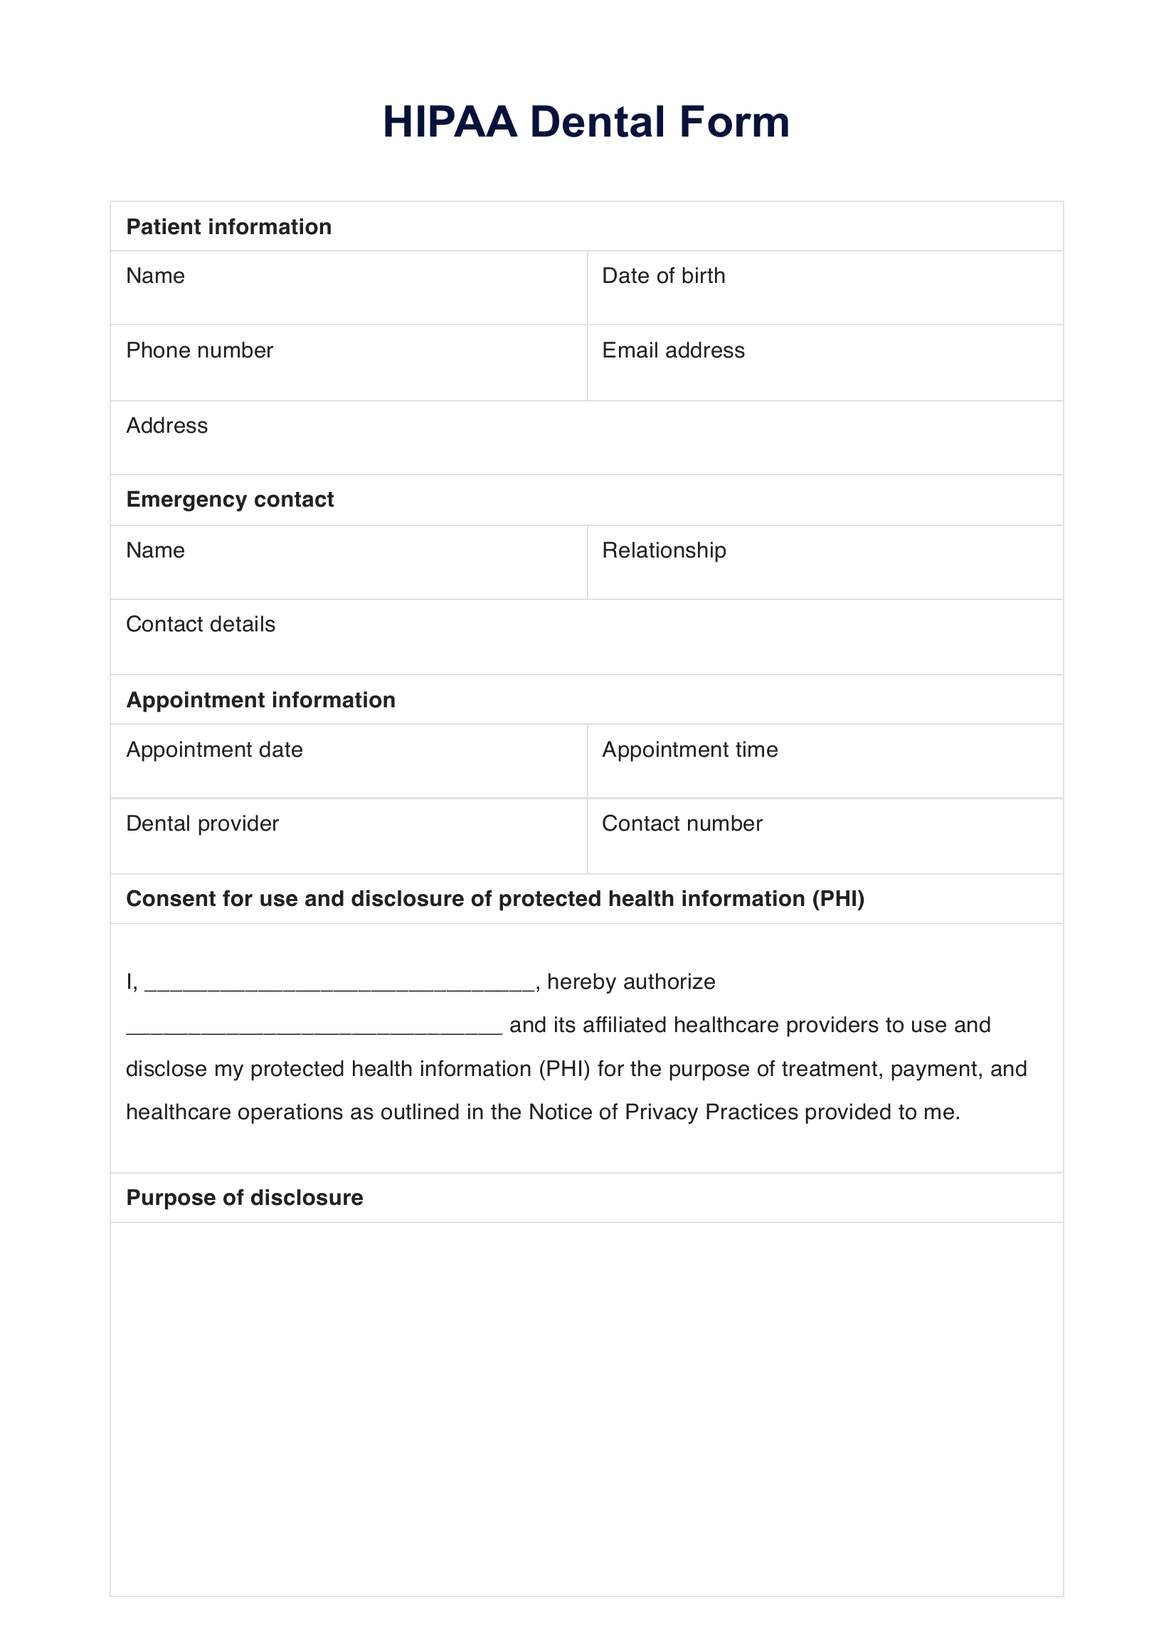 HIPAA Dental Form PDF Example